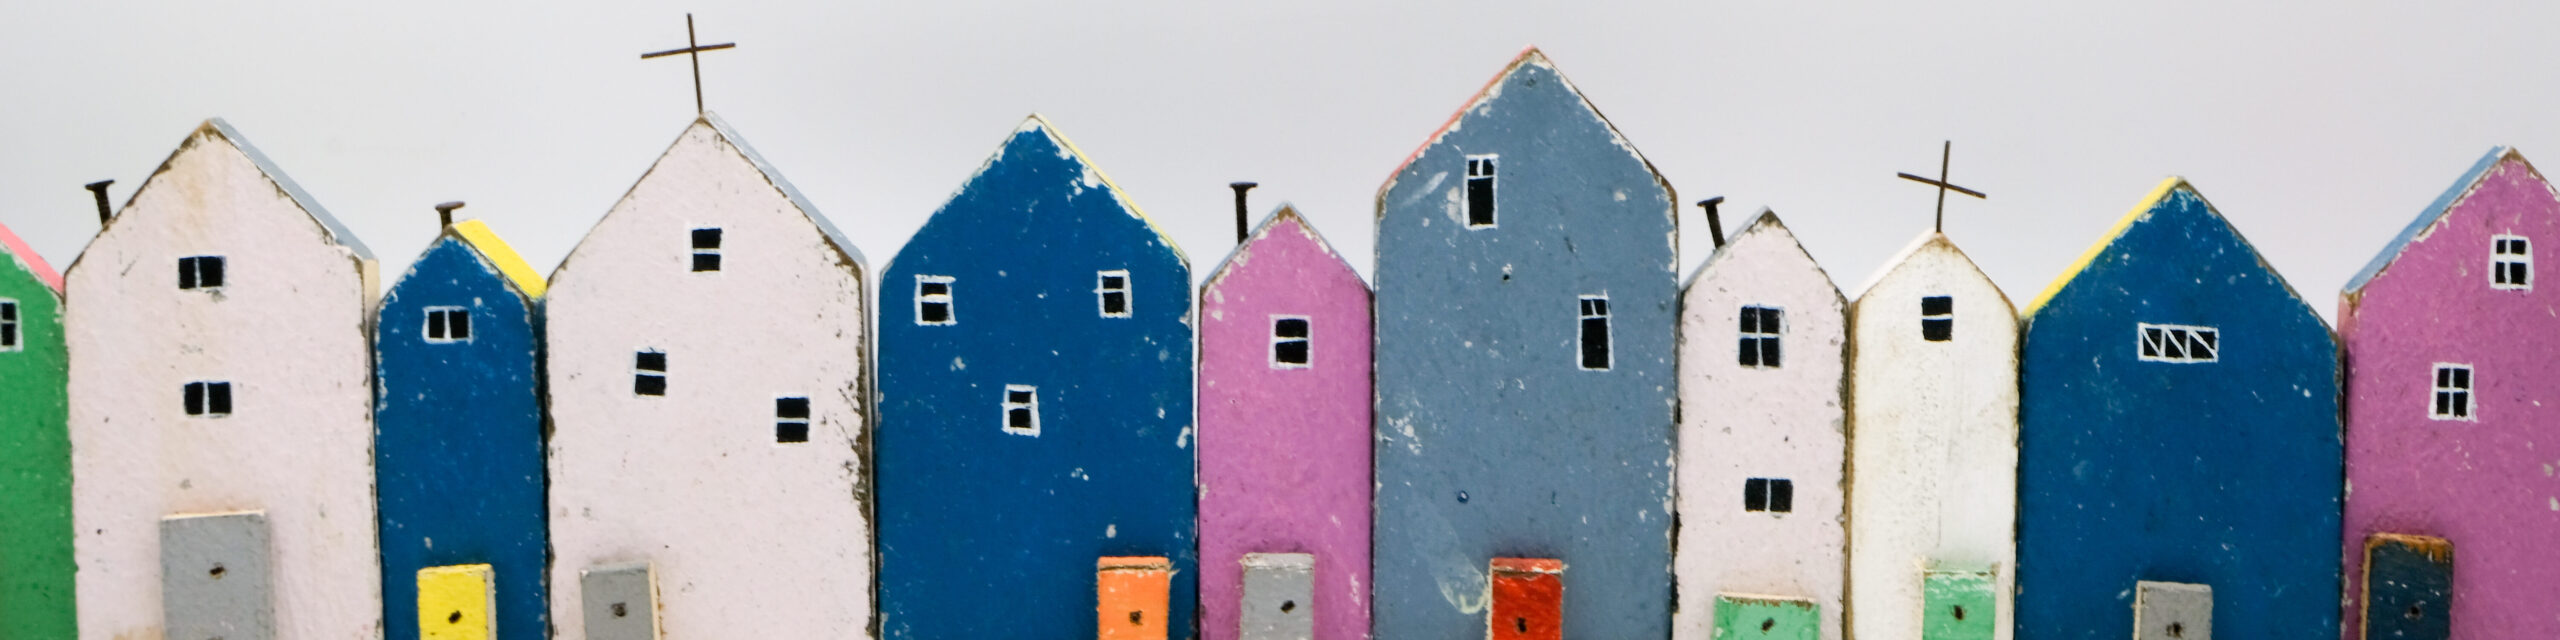 Bunte Miniaturen mehrerer Häuser